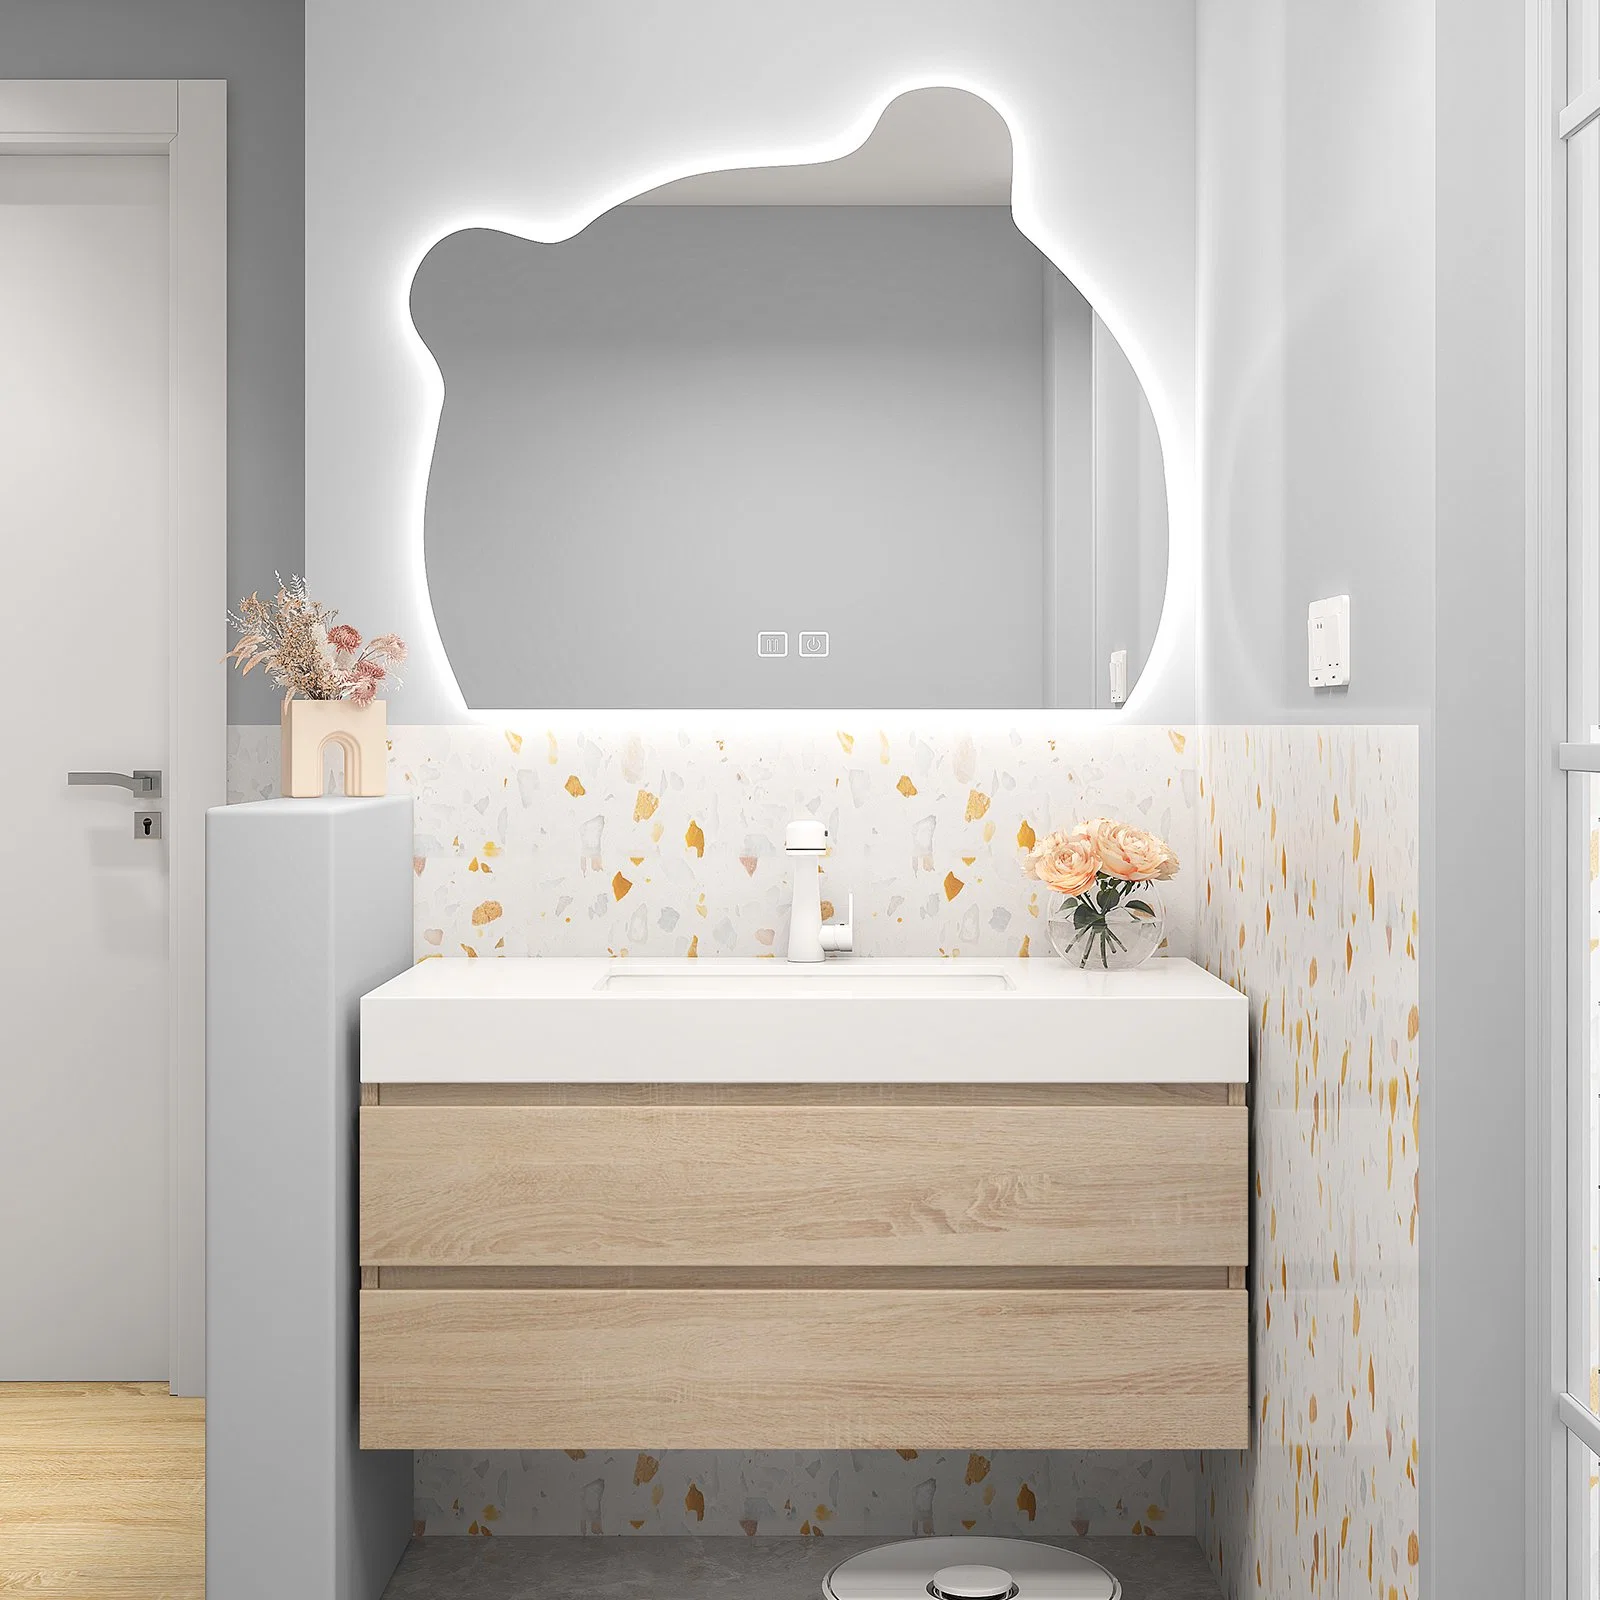 2022 New Arrival Products Hotel Modern Makeup Vanity Mirror Kids Bathroom Bear Irregular Shaped Cute Mirrors Decor Wall Large